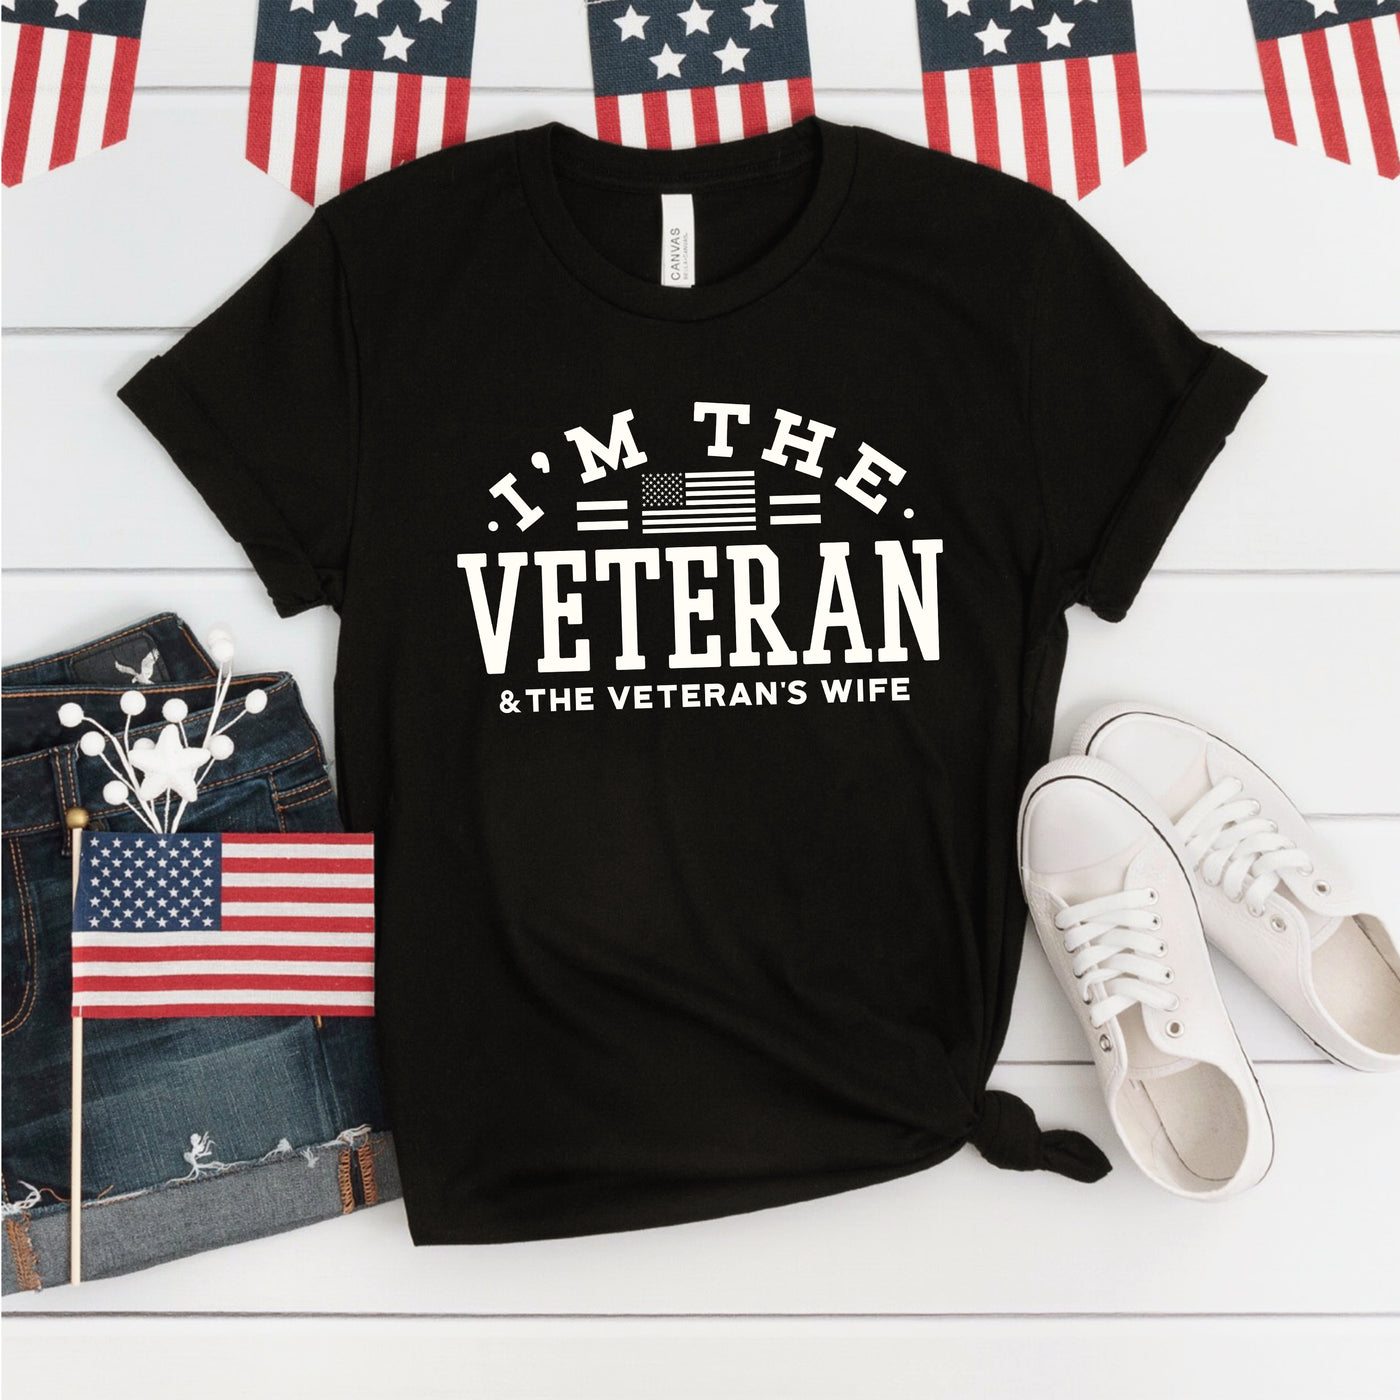 Veteran's Wife T-shirt